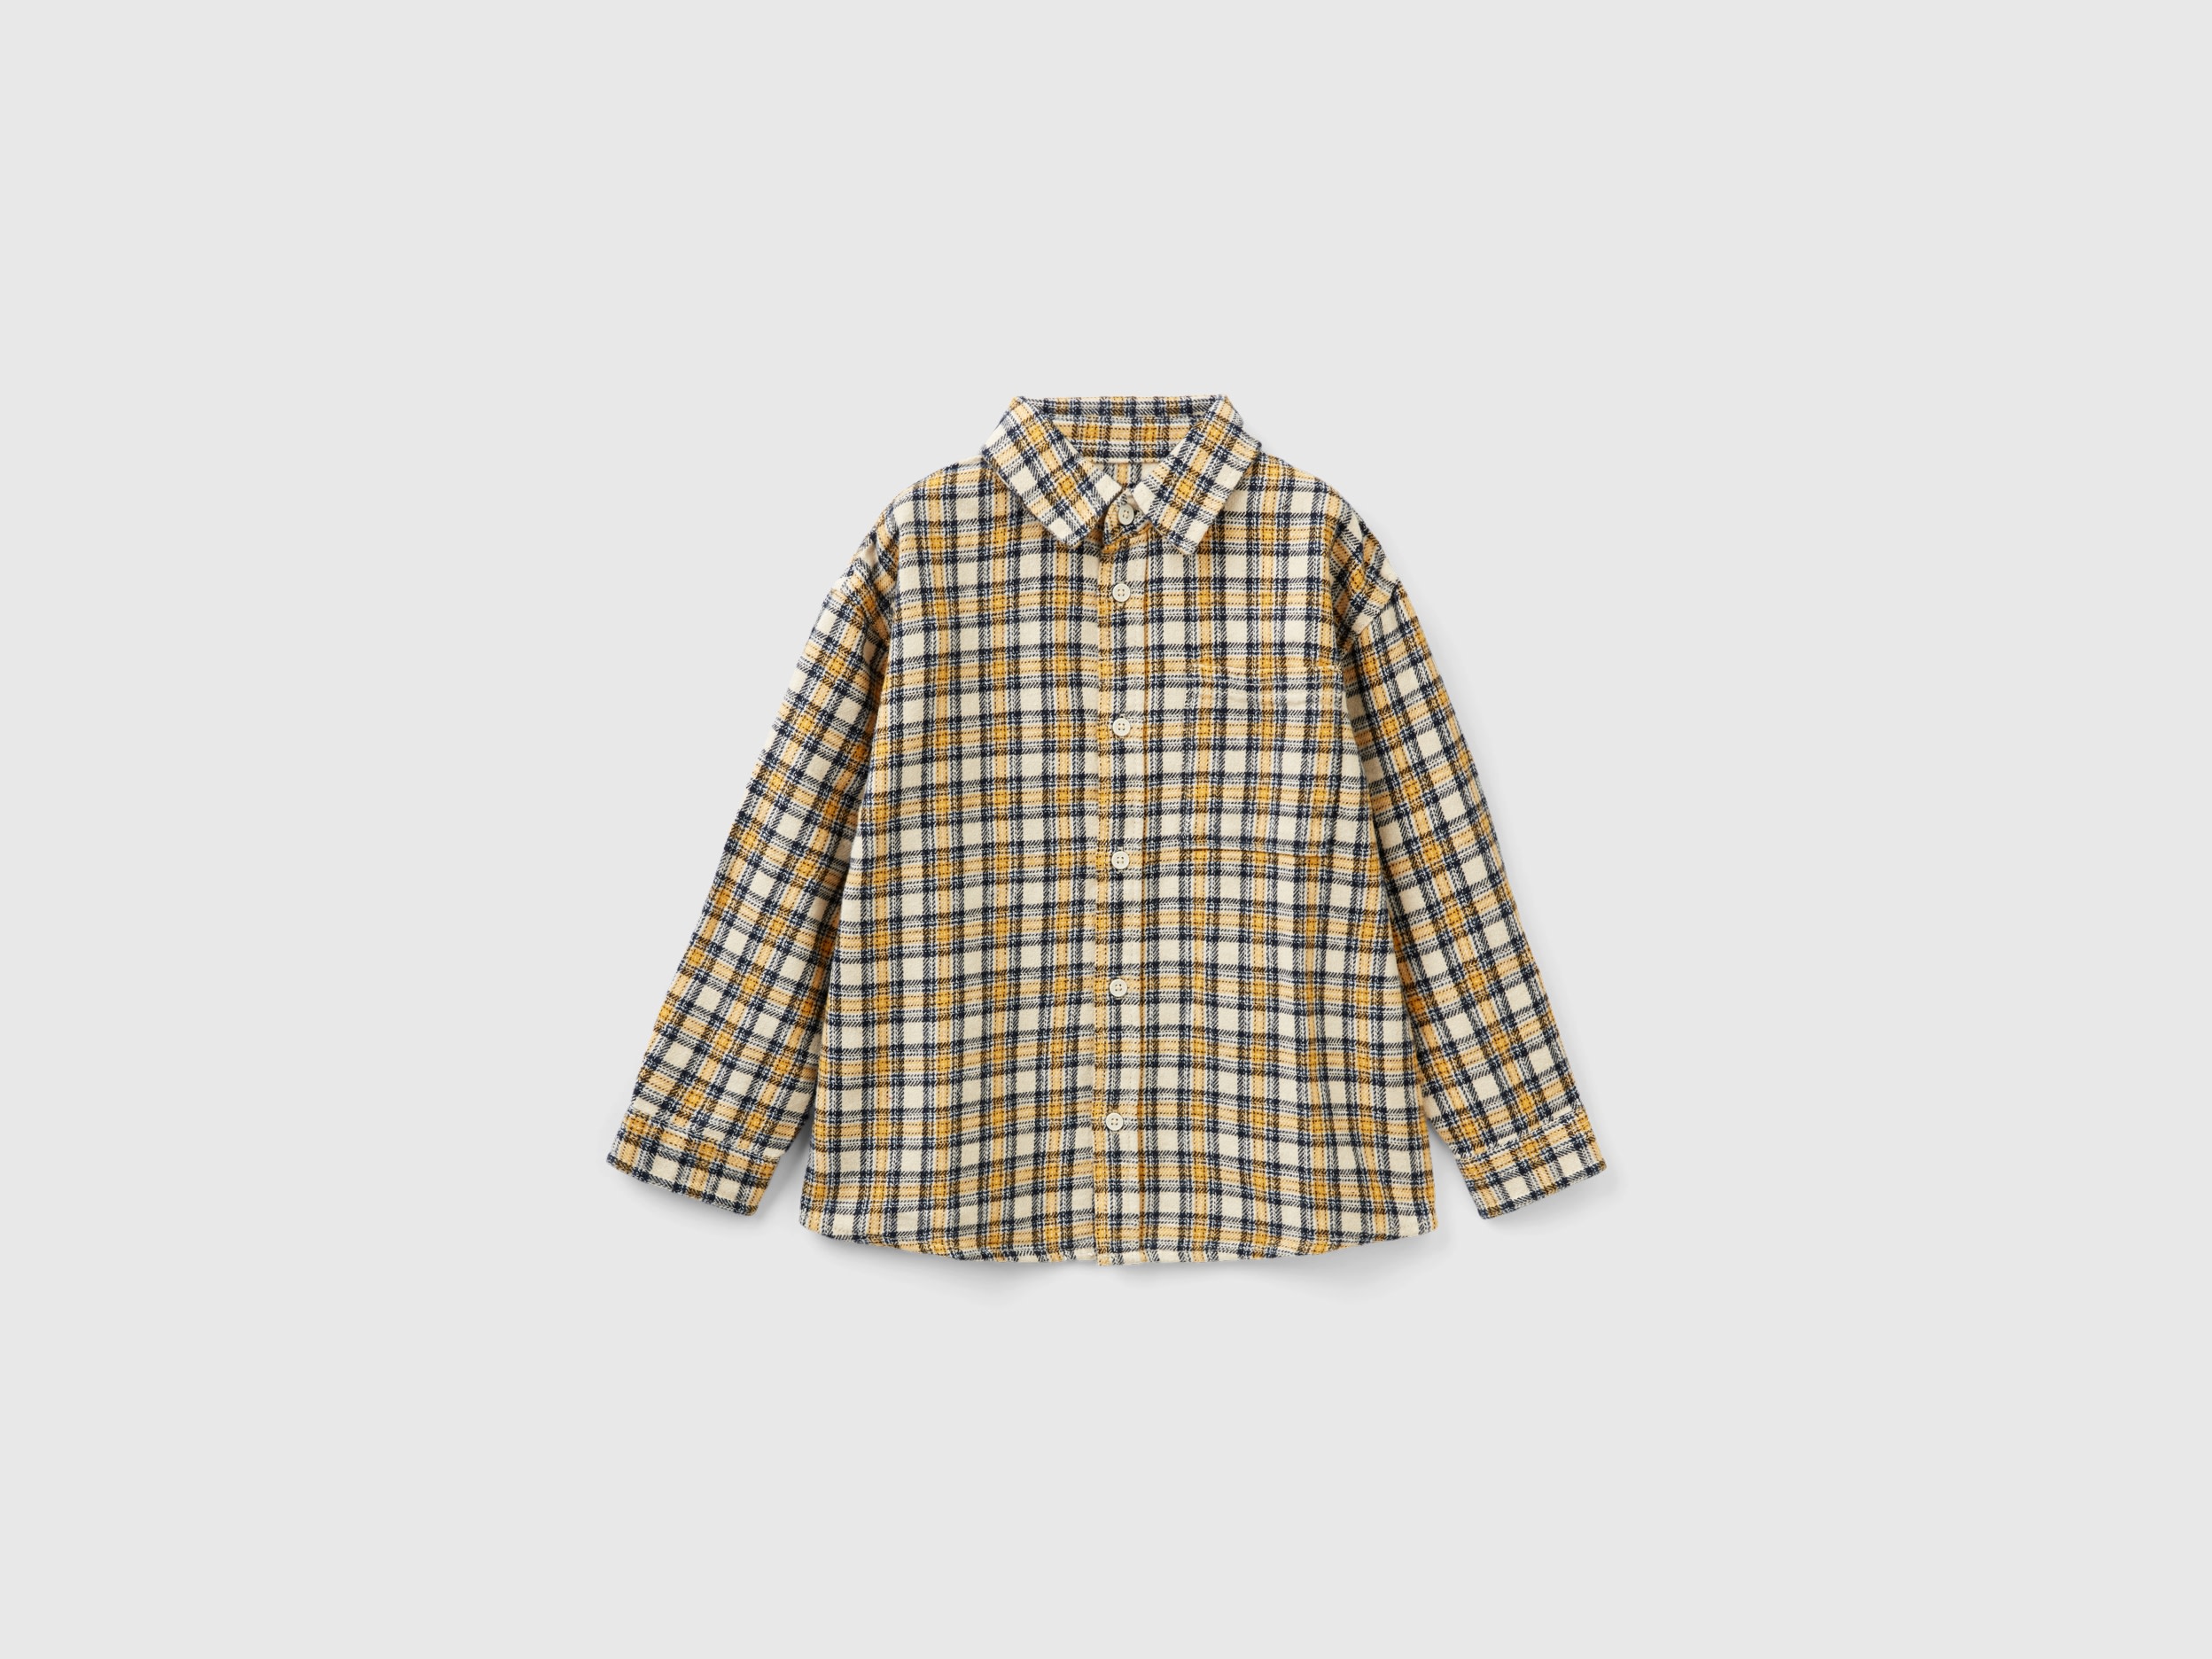 Benetton, Check Flannel Shirt, size 2-3, Multi-color, Kids